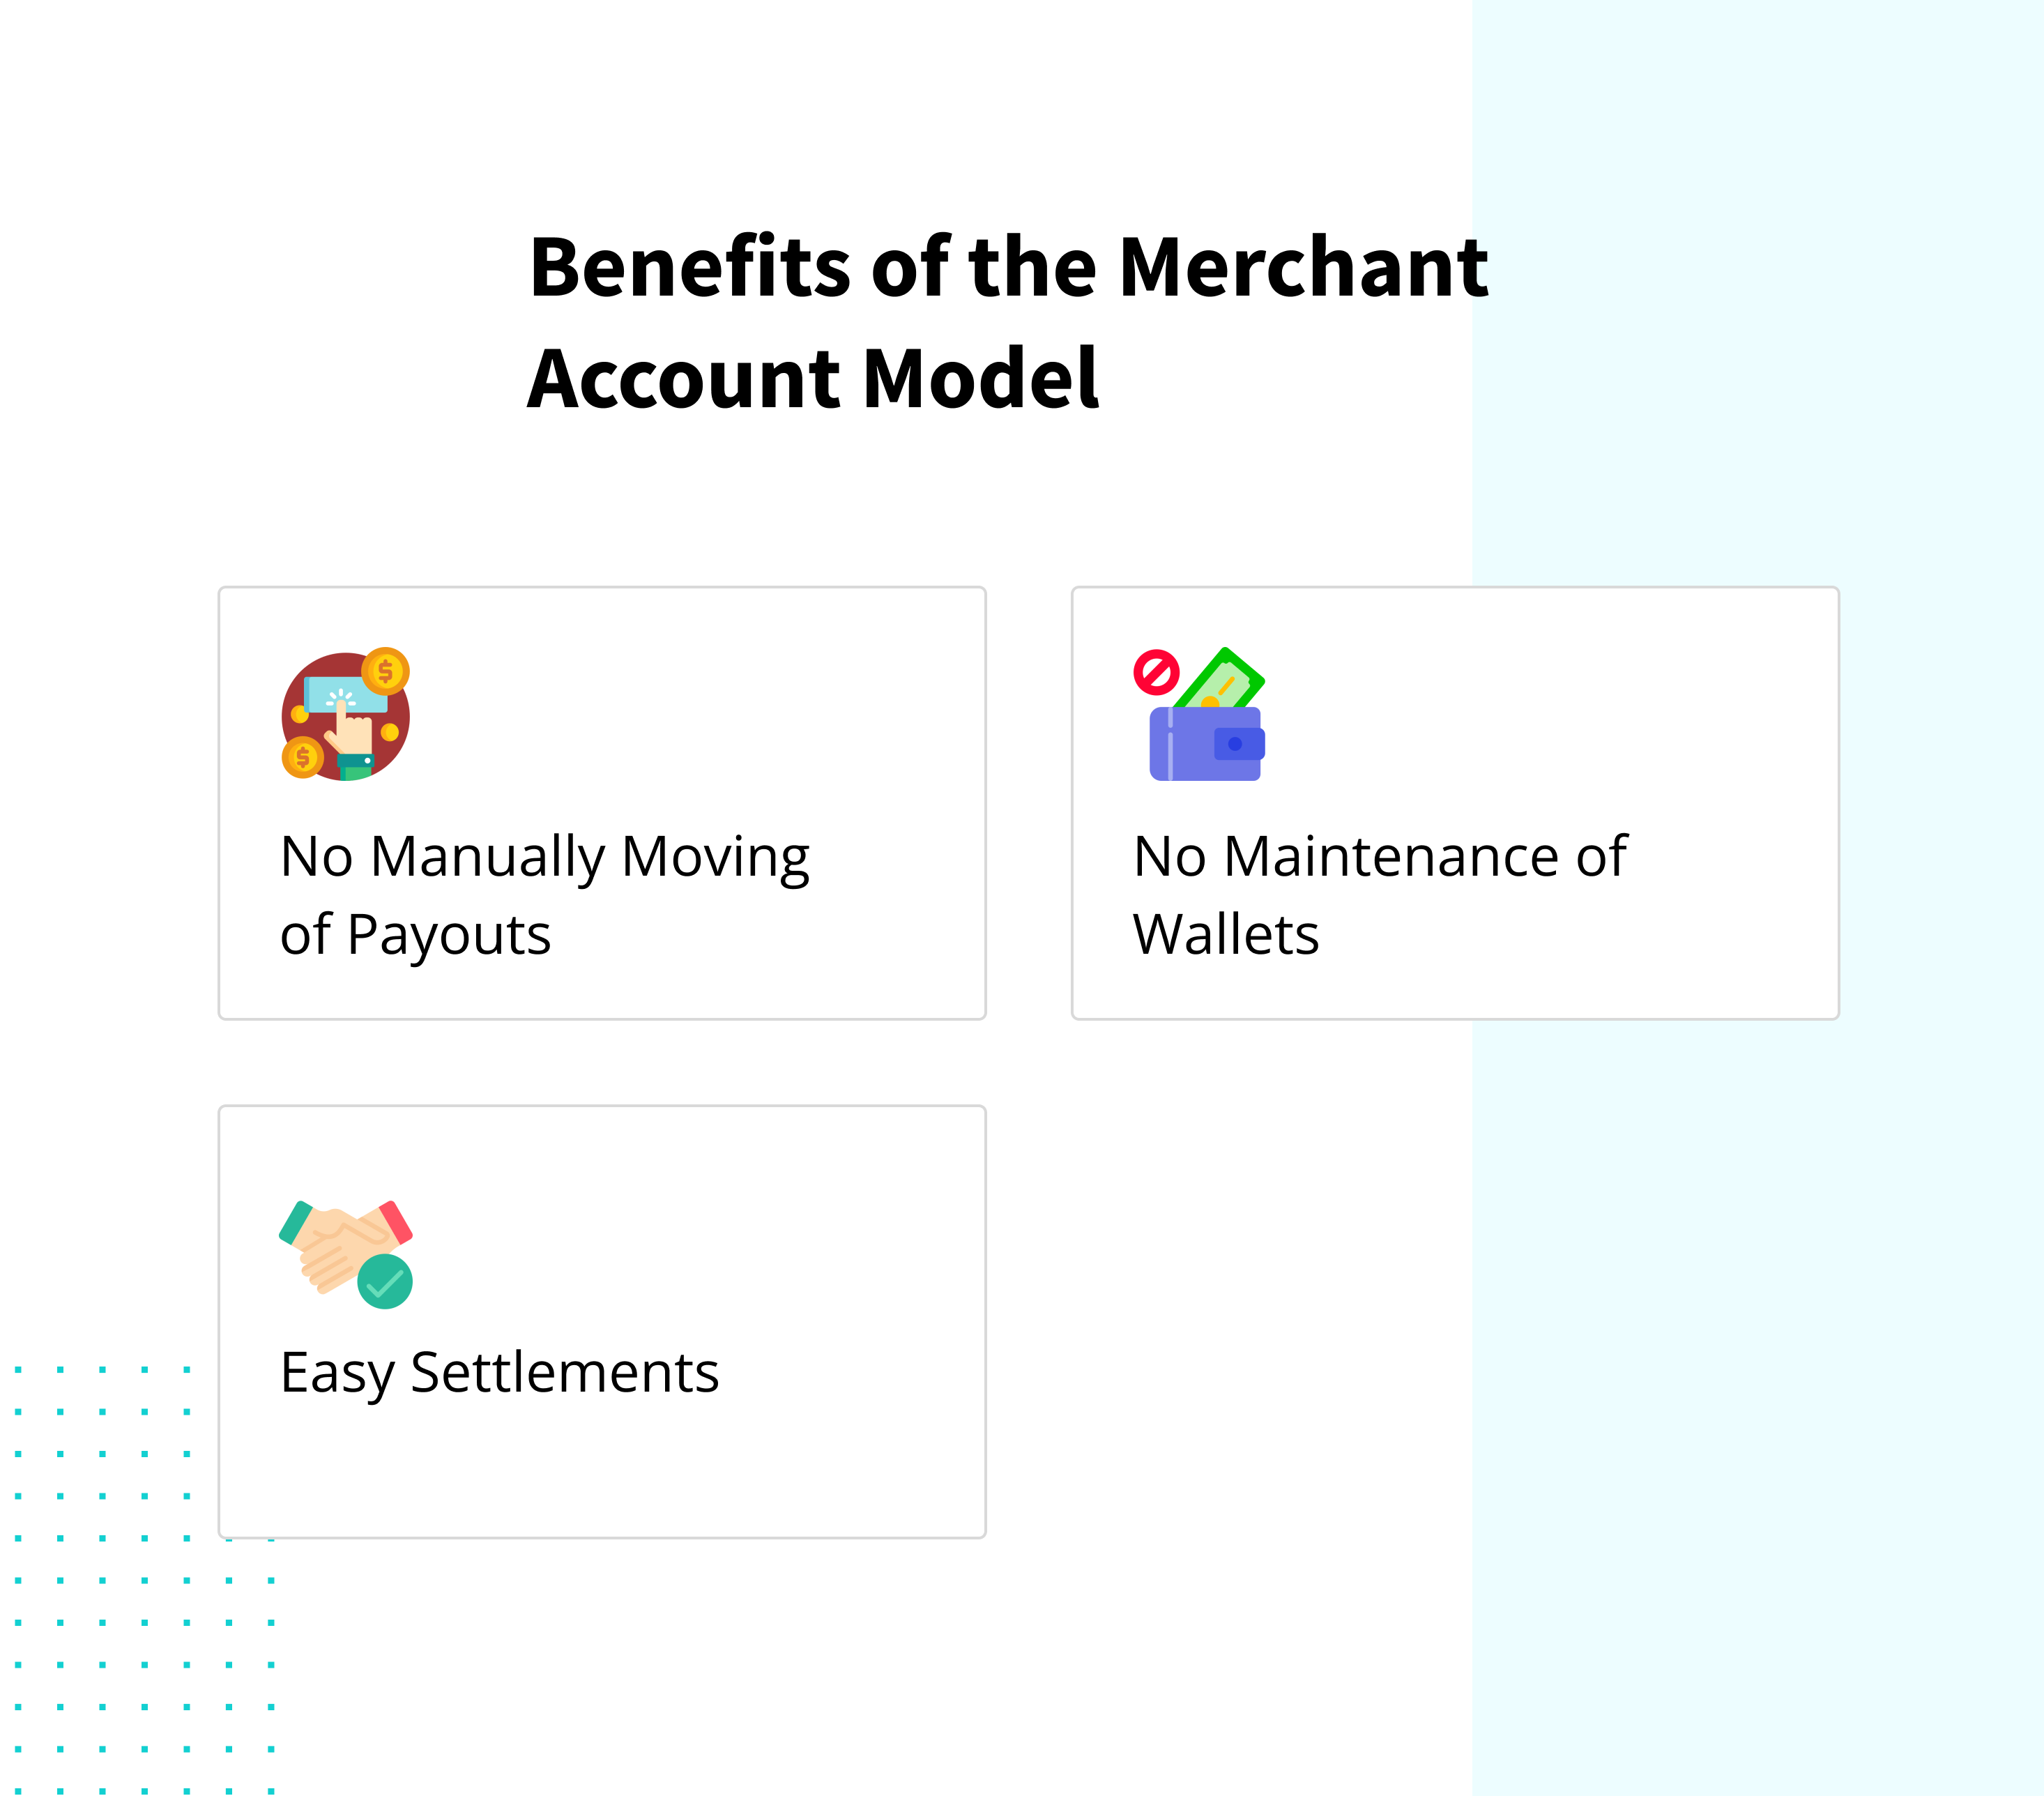 Benefits of the Merchant Account Model